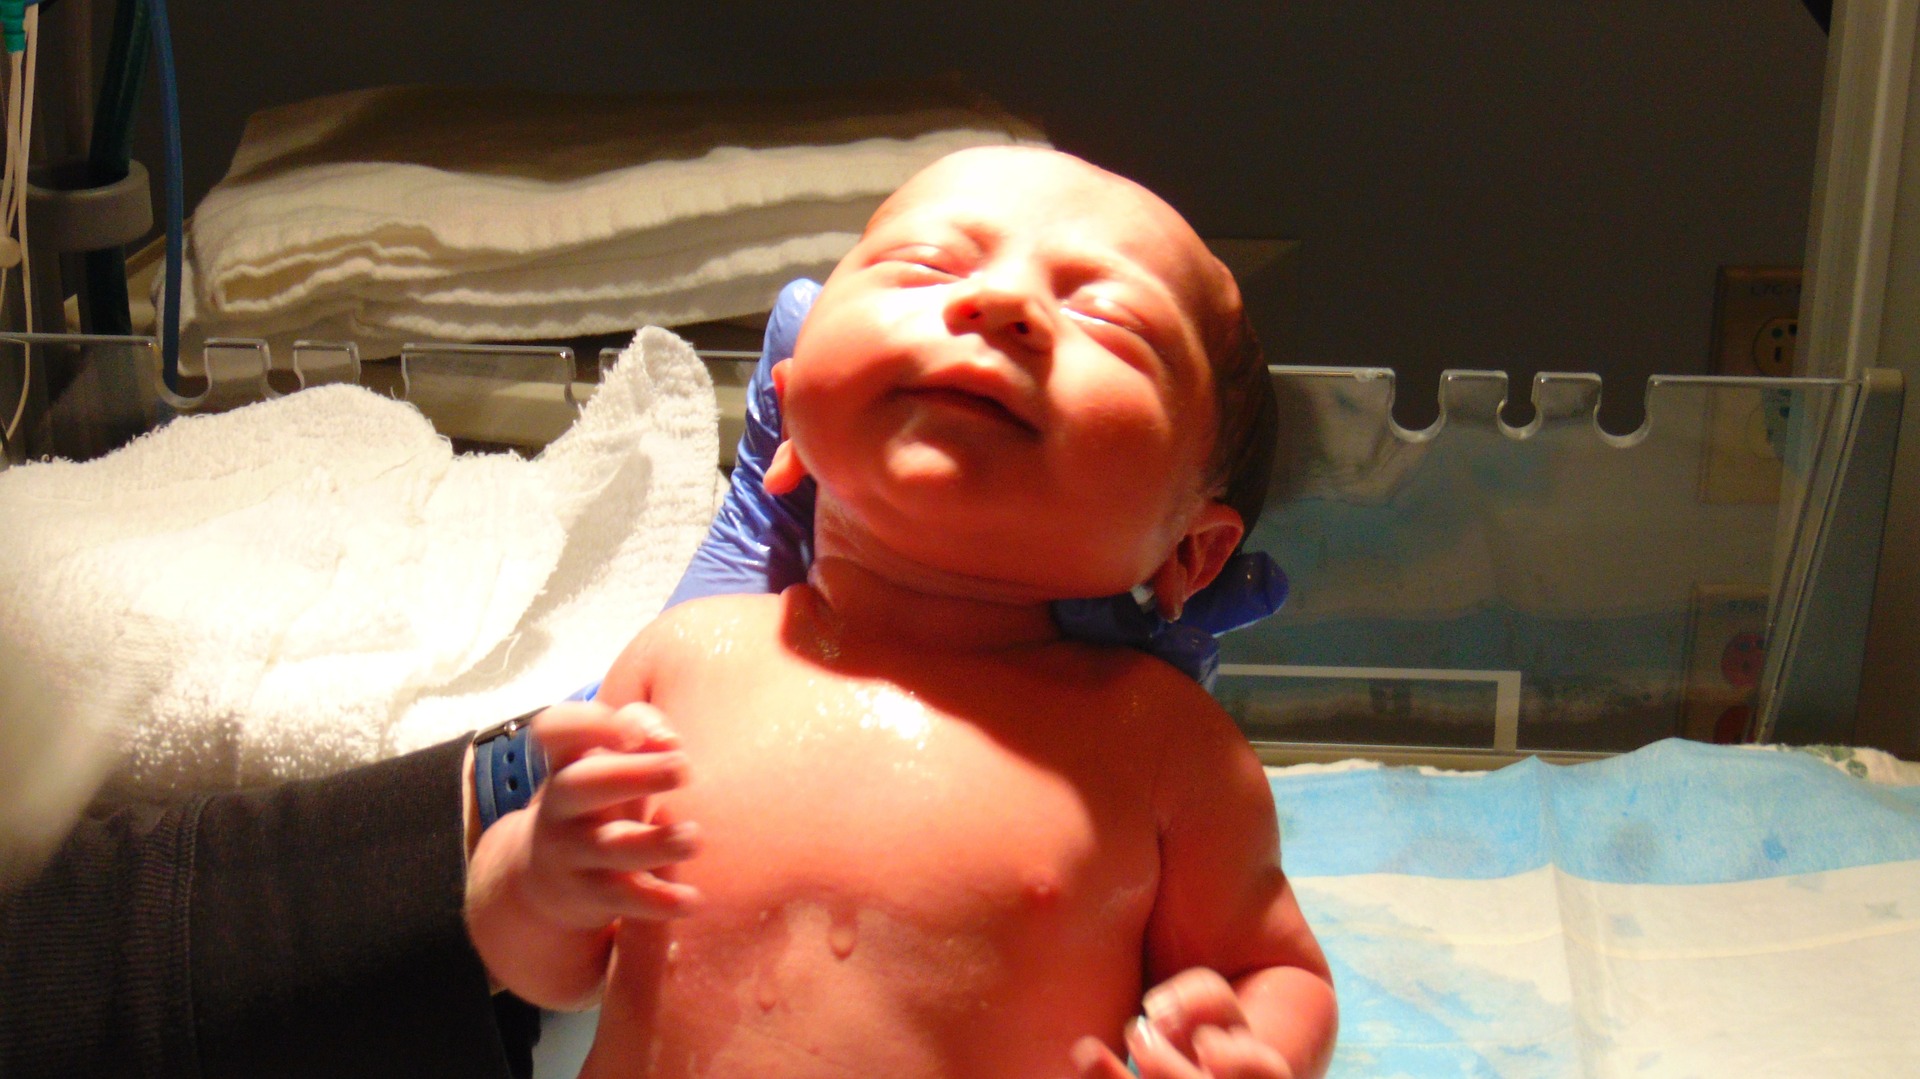 New born being held in doctor's hands. 